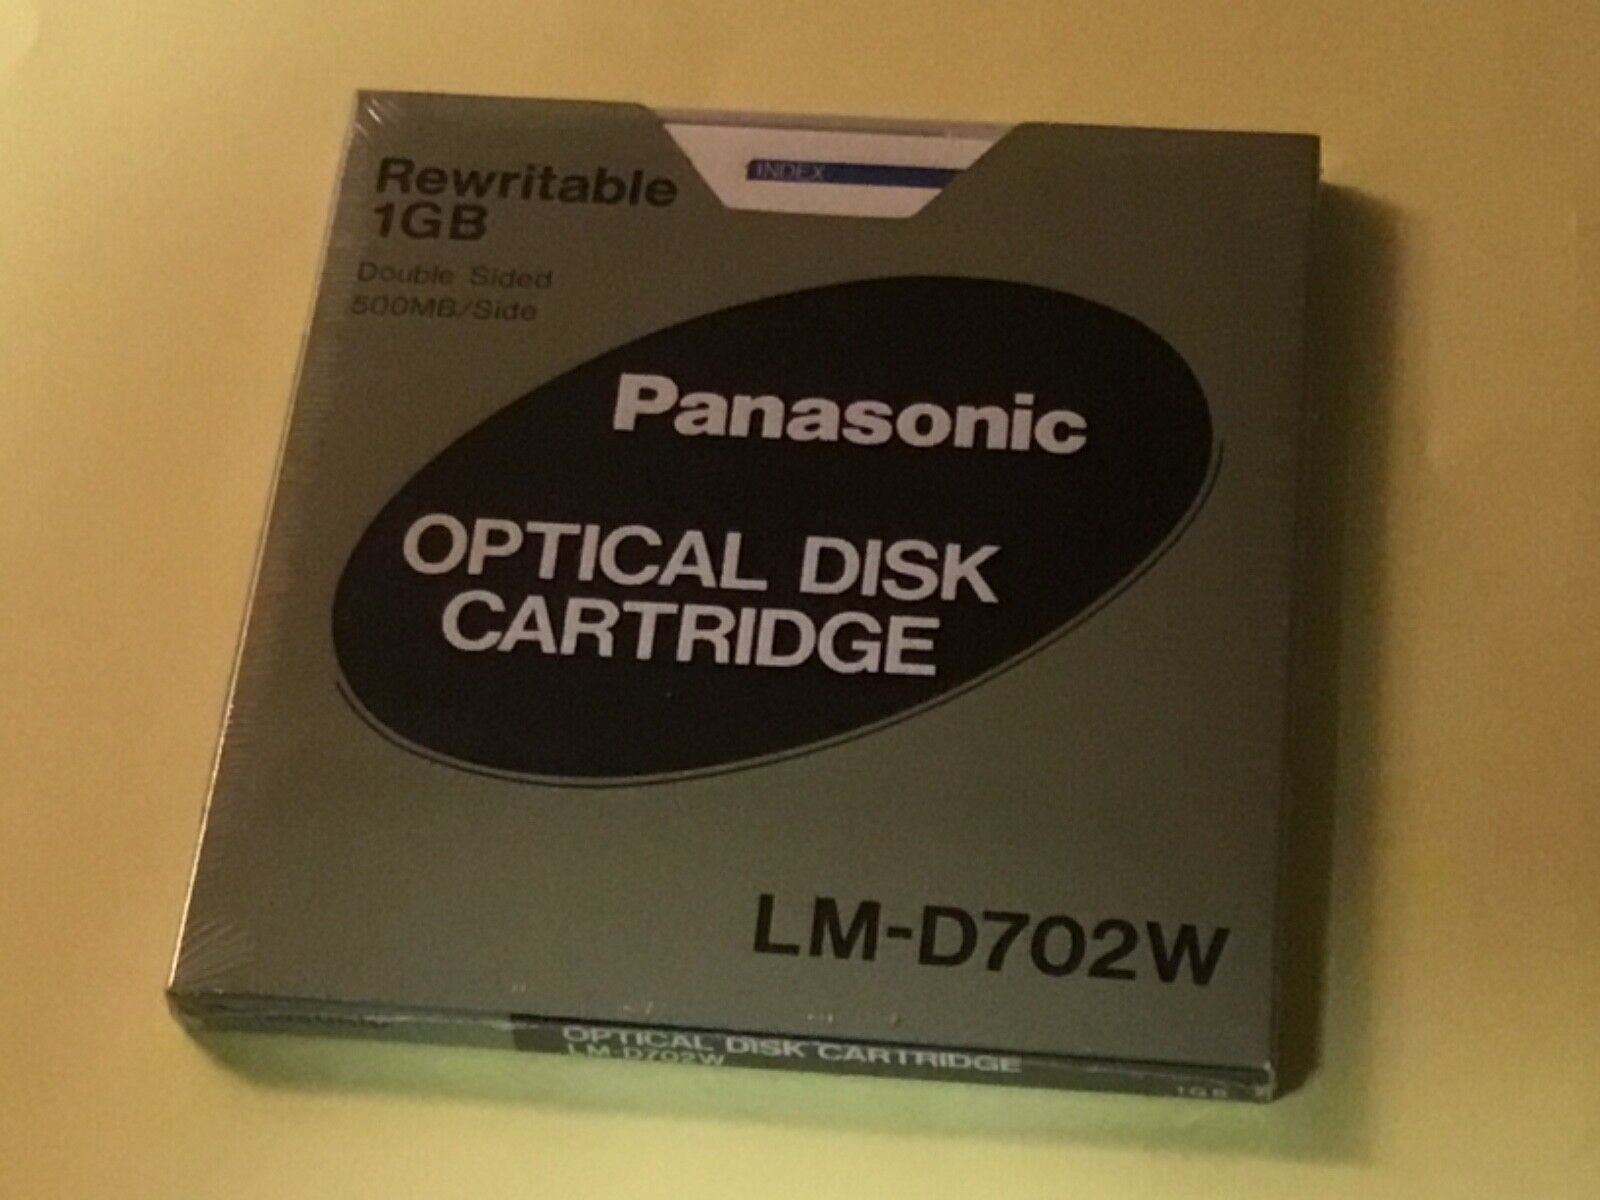 New Lot of 23 Panasonic LM-D702W Rewritable 1GB Magneto Optical Disk2 Sided Panasonic LM-D702W